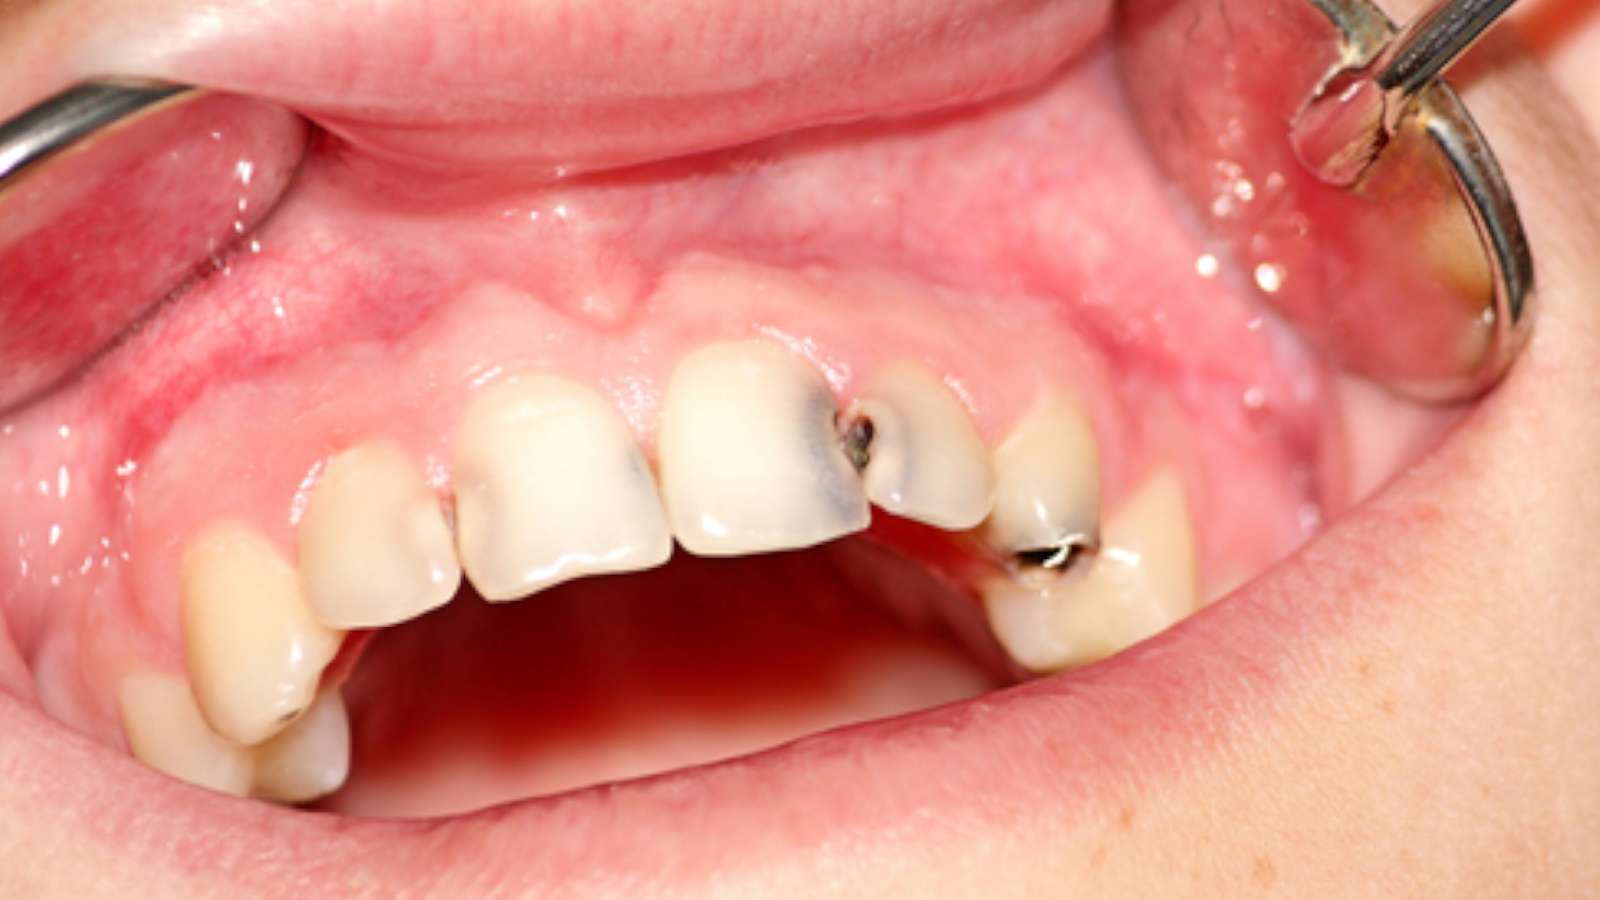 types of cavities - class 3 cavity